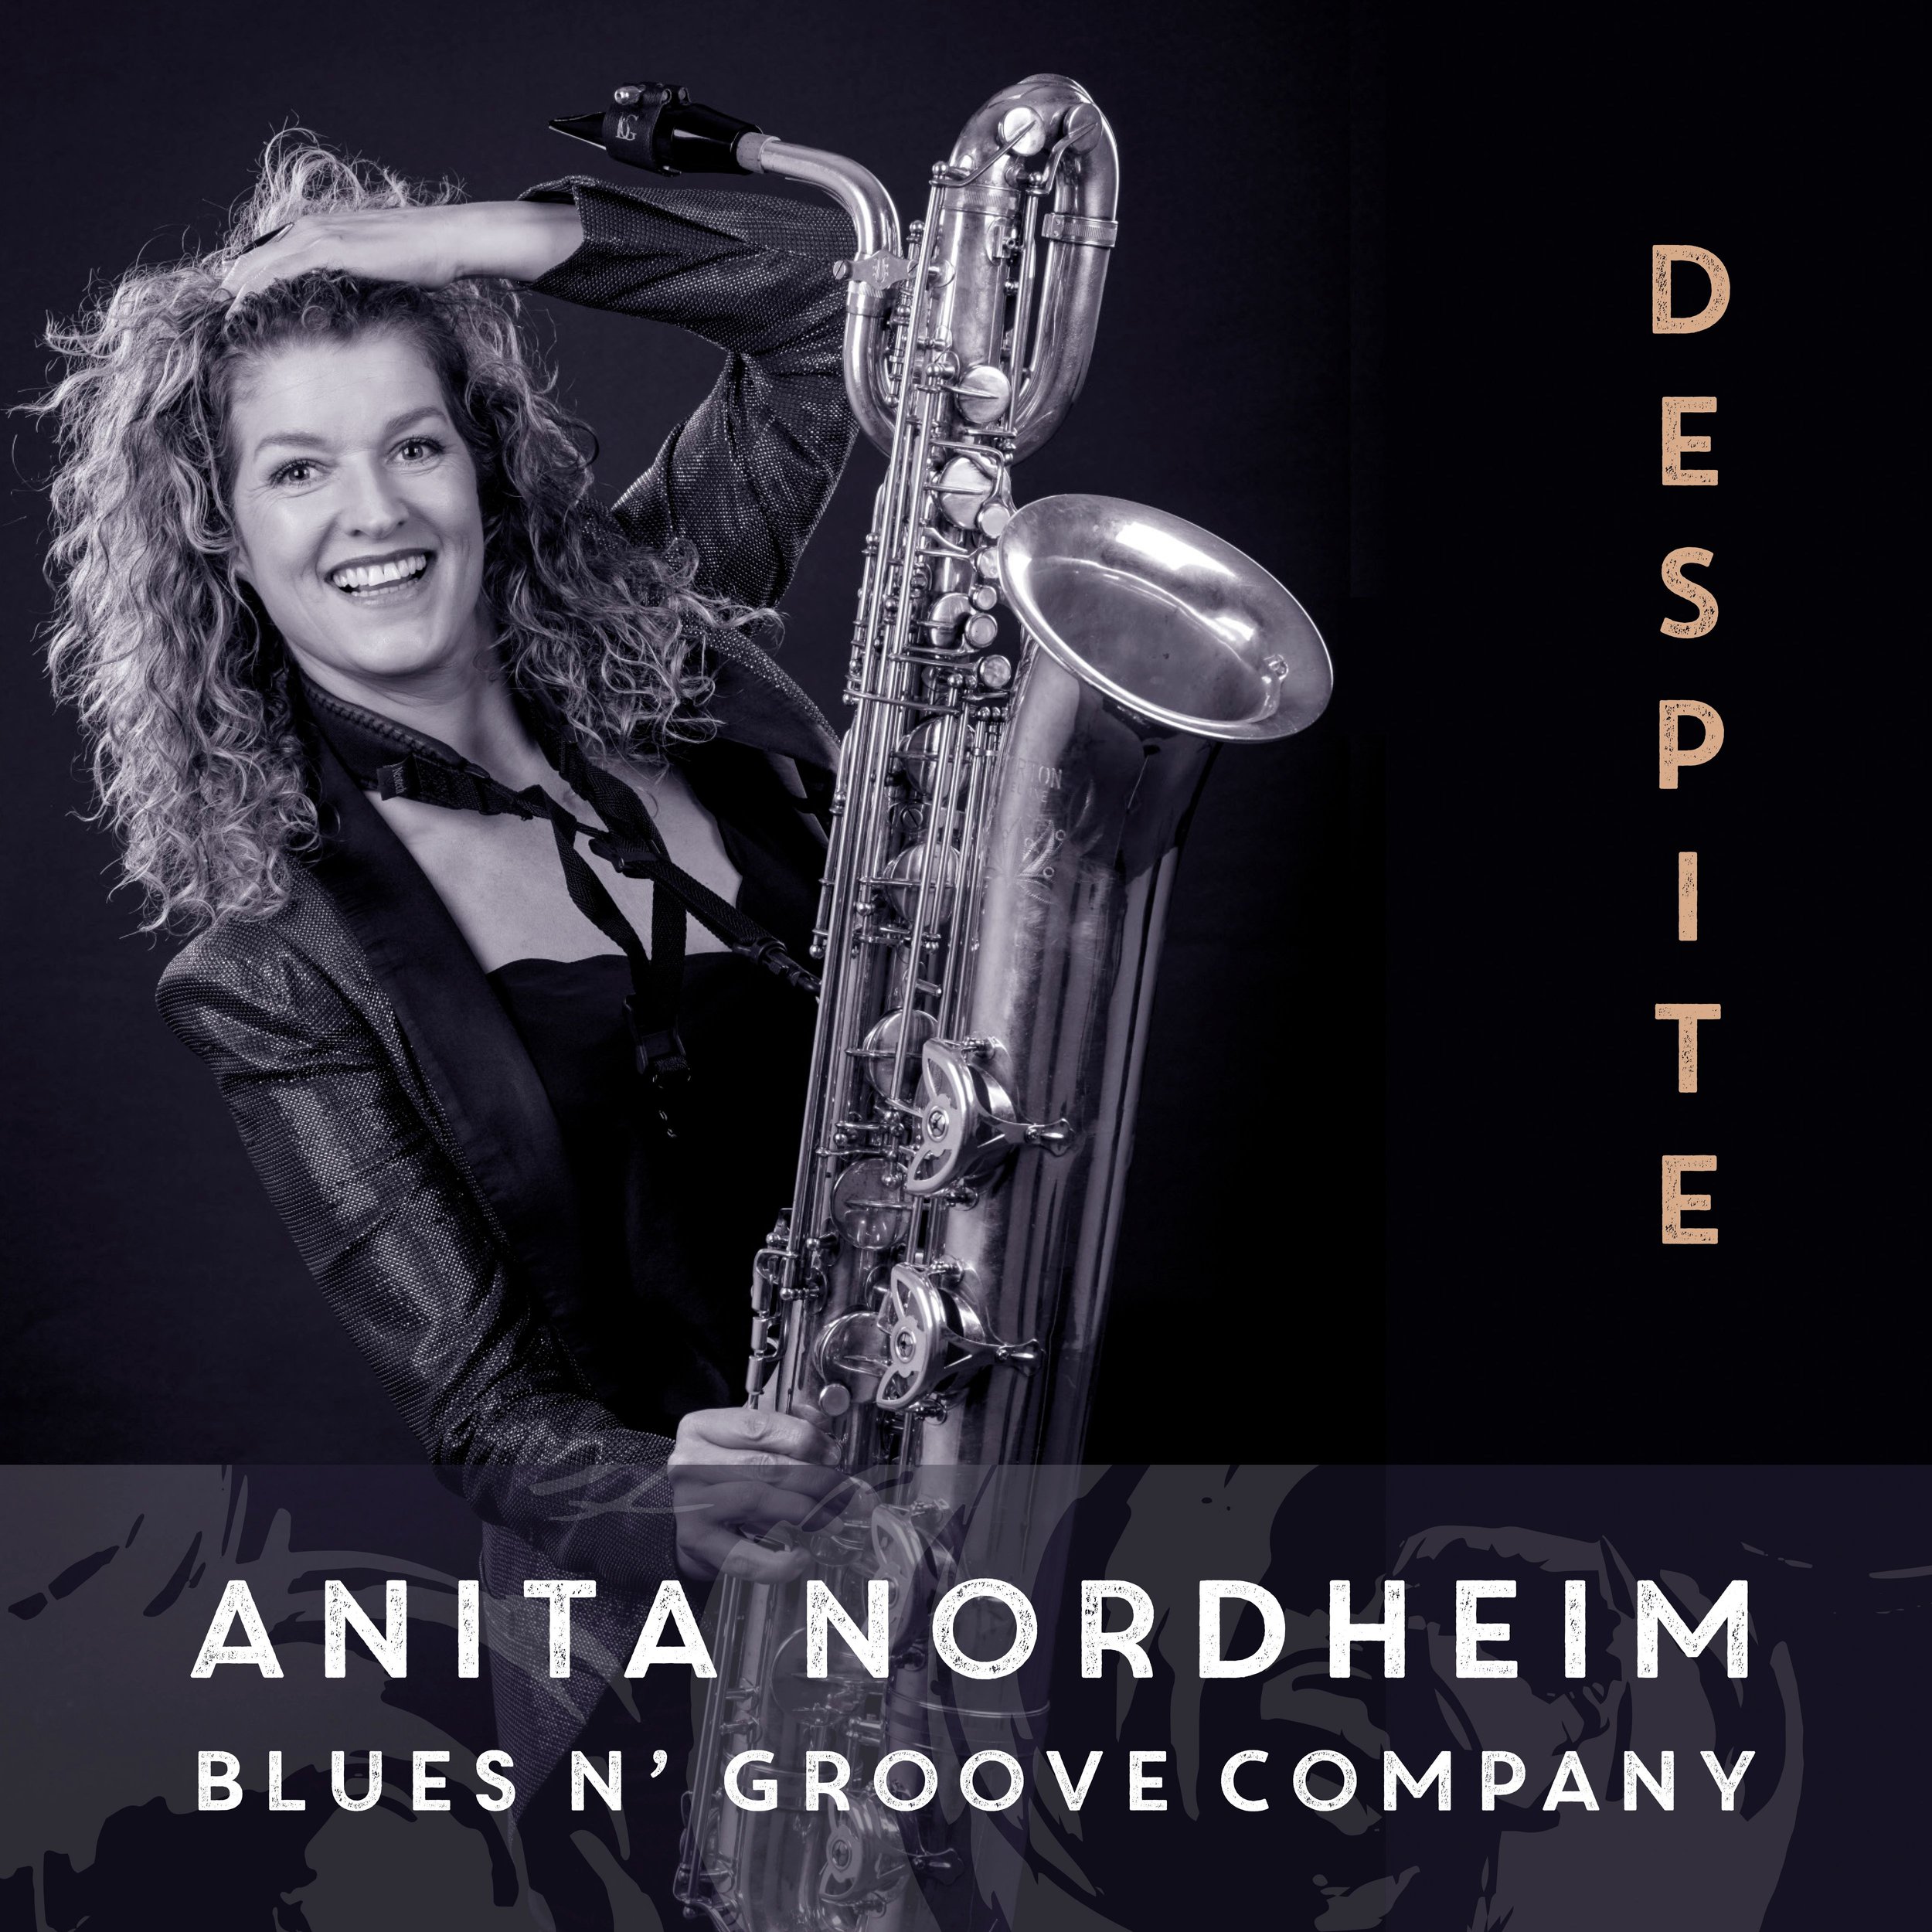 Anita Nordheim Blues n' Groove Company